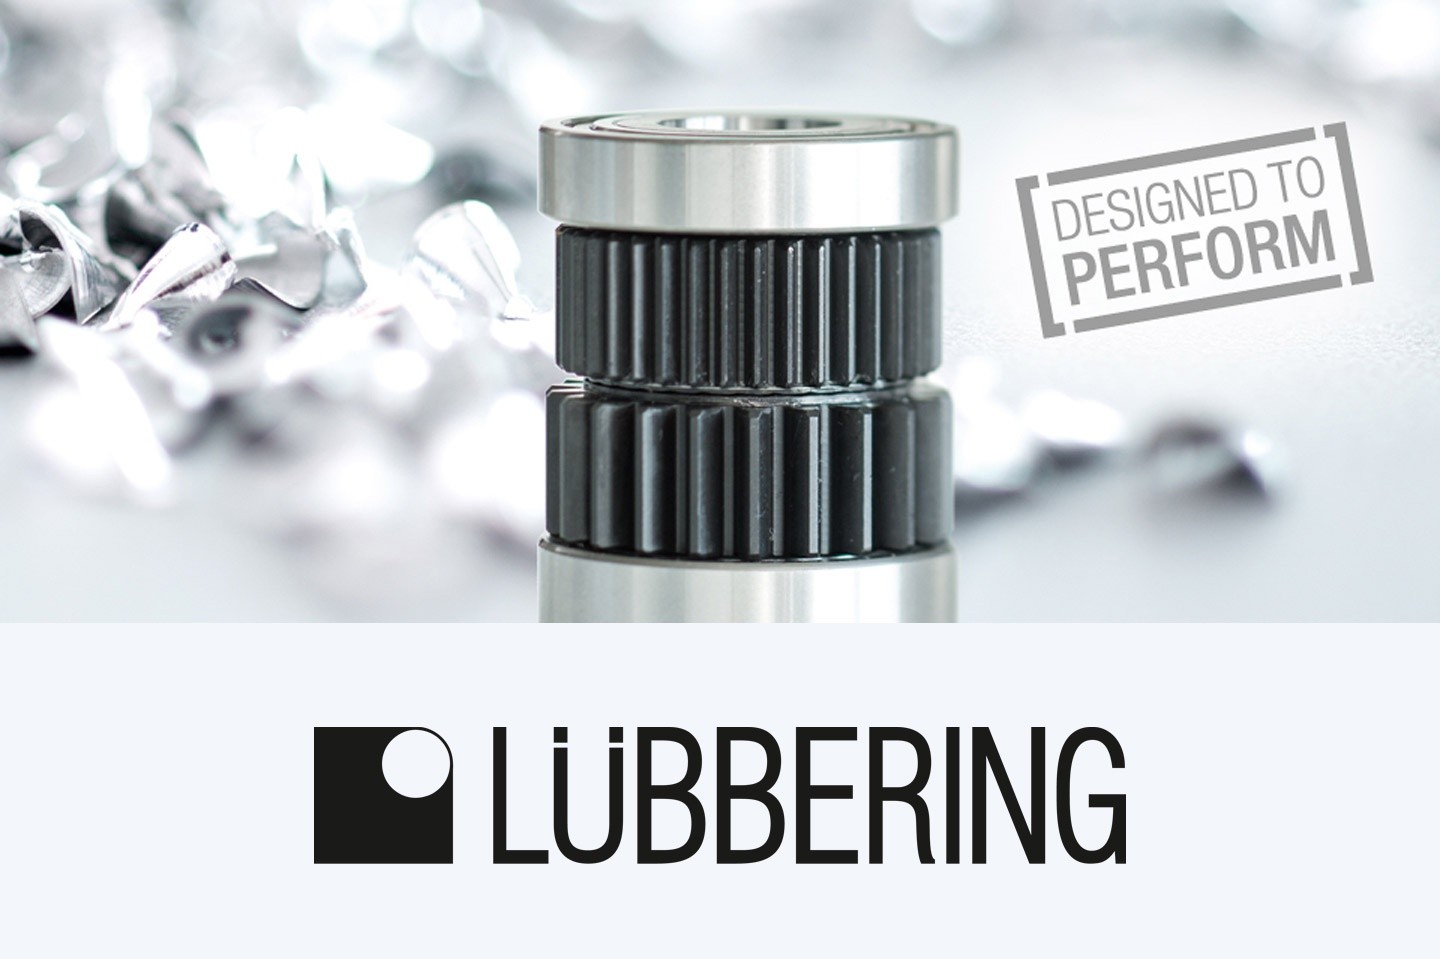 Lübbering Designed to perform